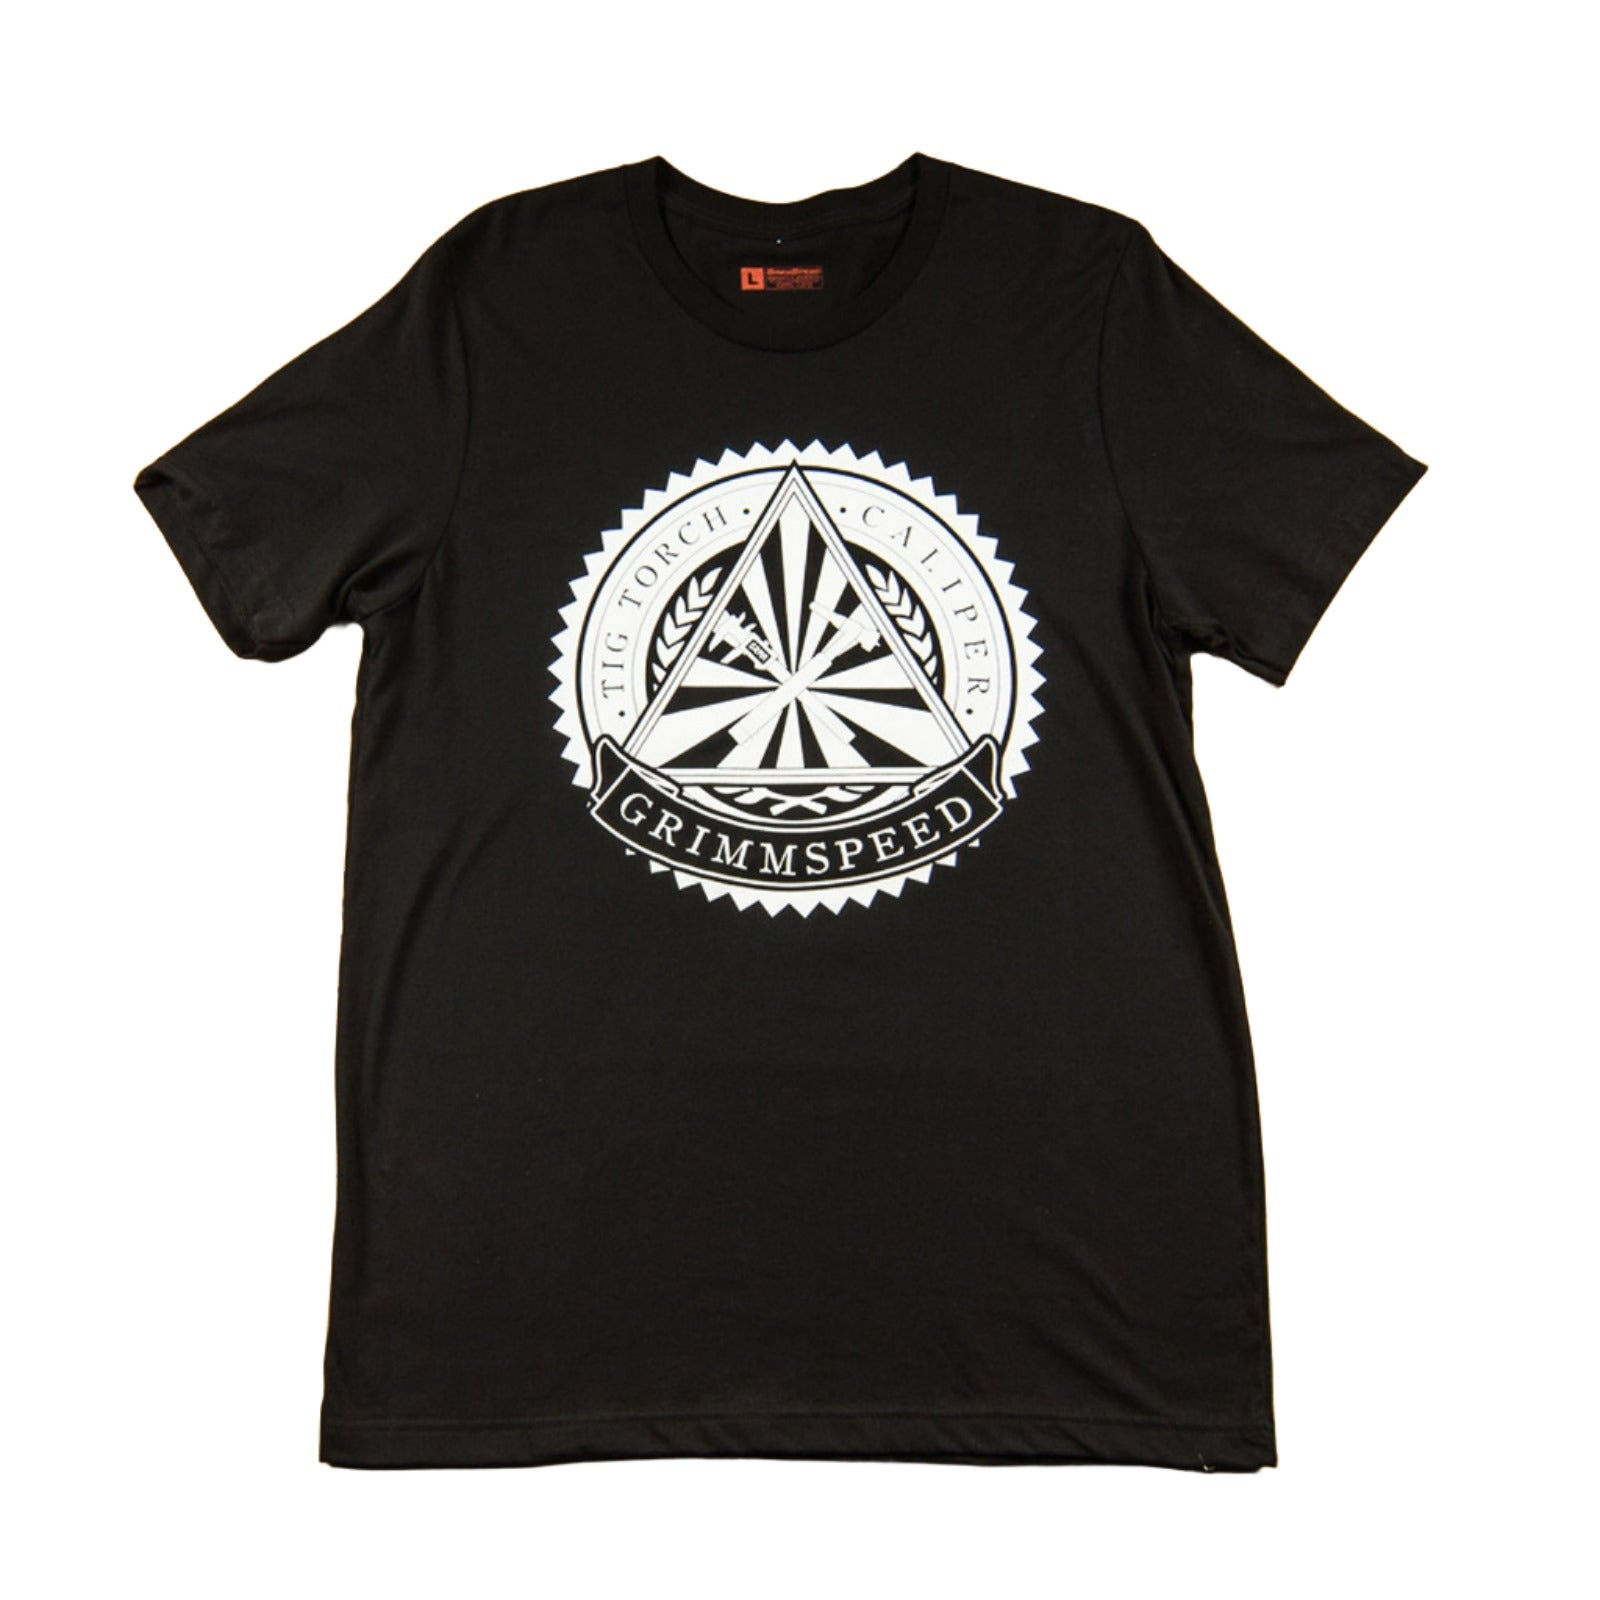 GrimmSpeed Torch and Caliper Illuminati T-Shirt